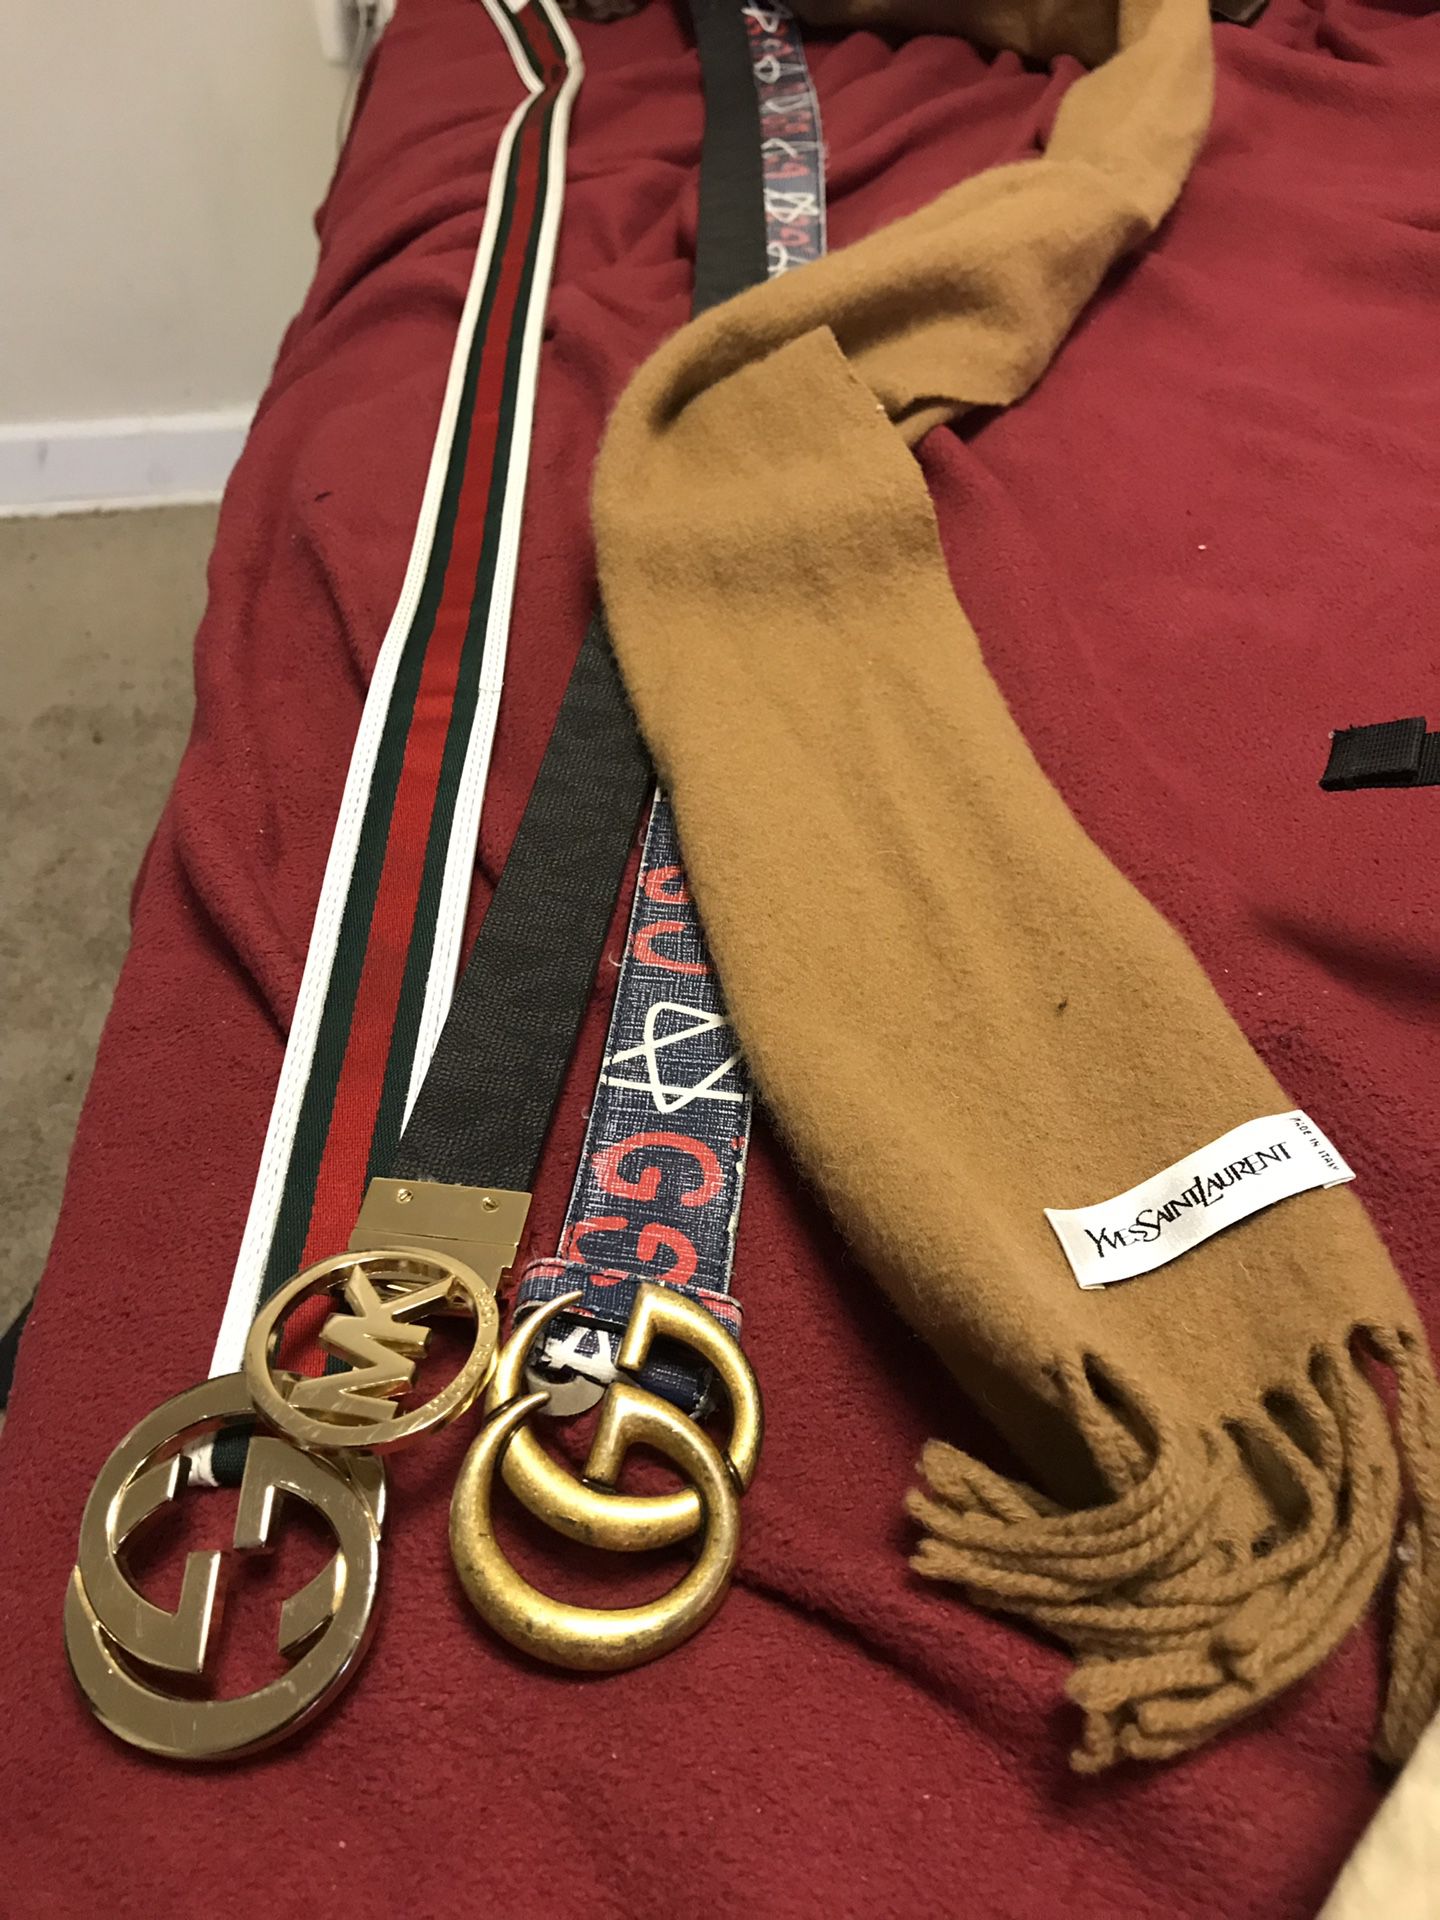 3 belts & ysl scarf